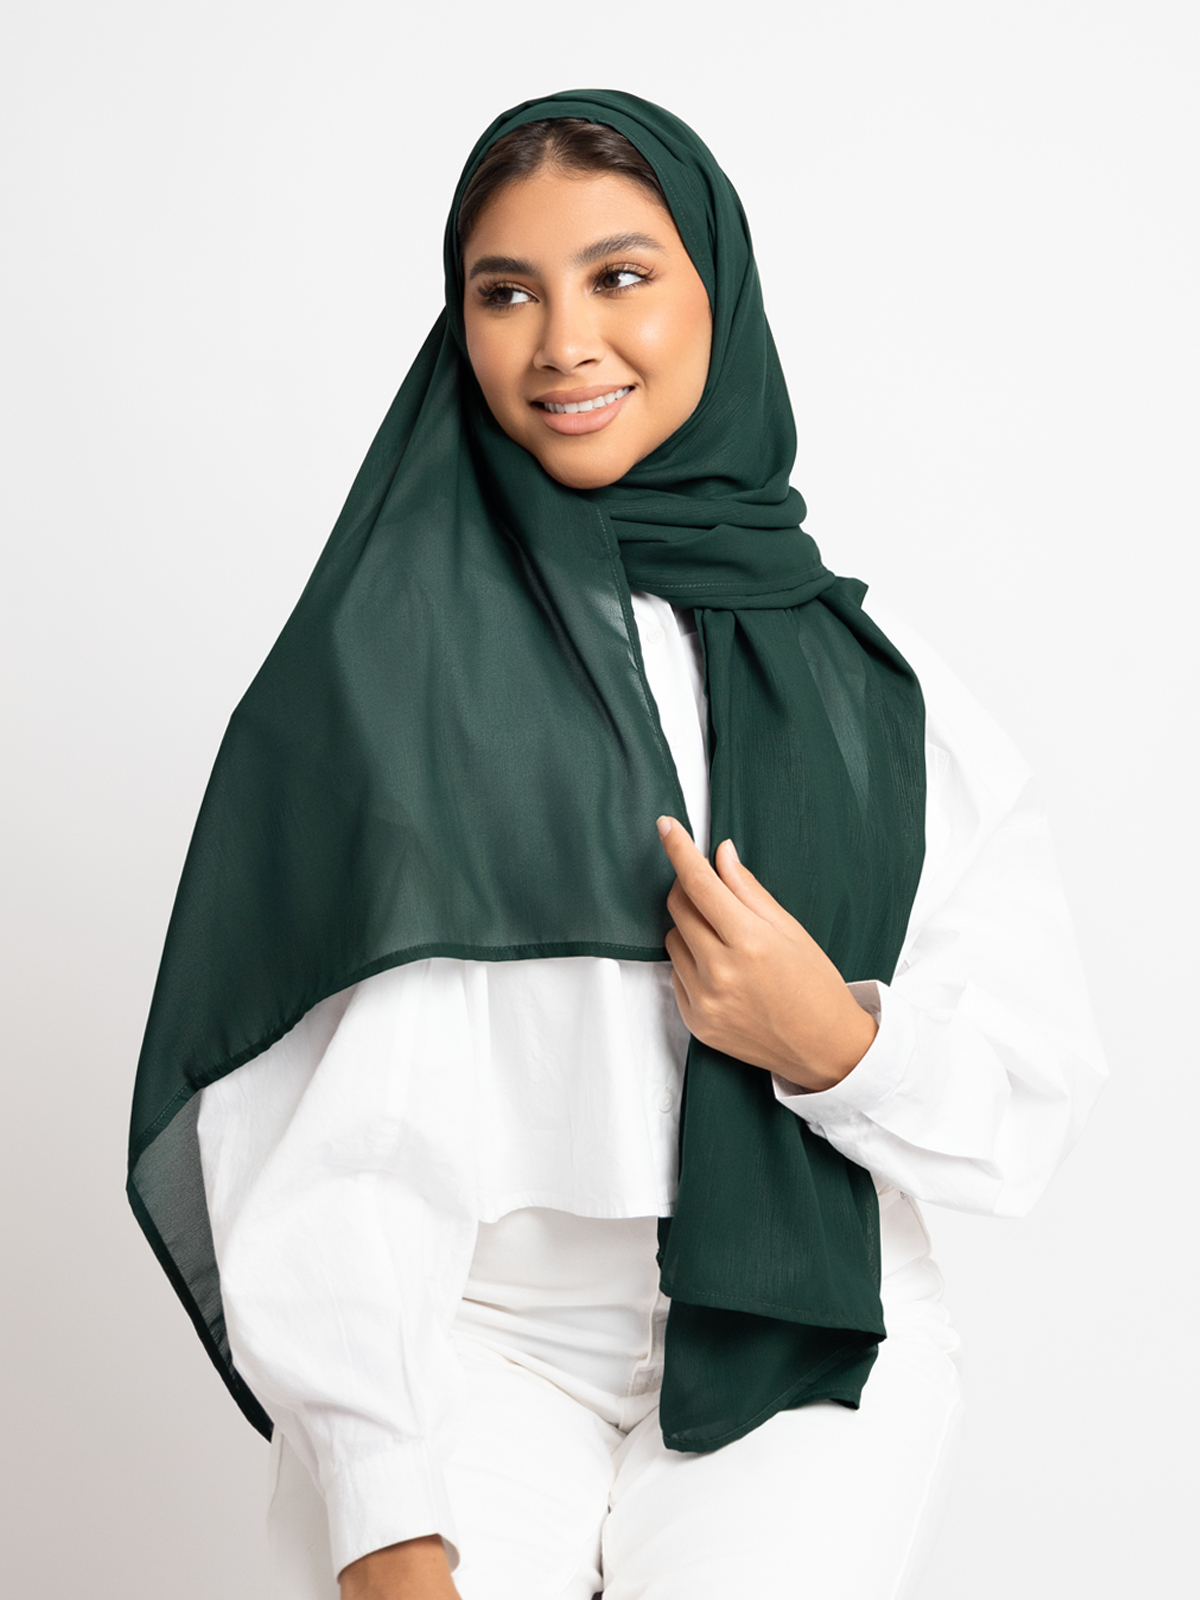 Luxurious chiffon hijab plain tarha 200 cm long grass green color high quality material online in ksa by kaafmeem